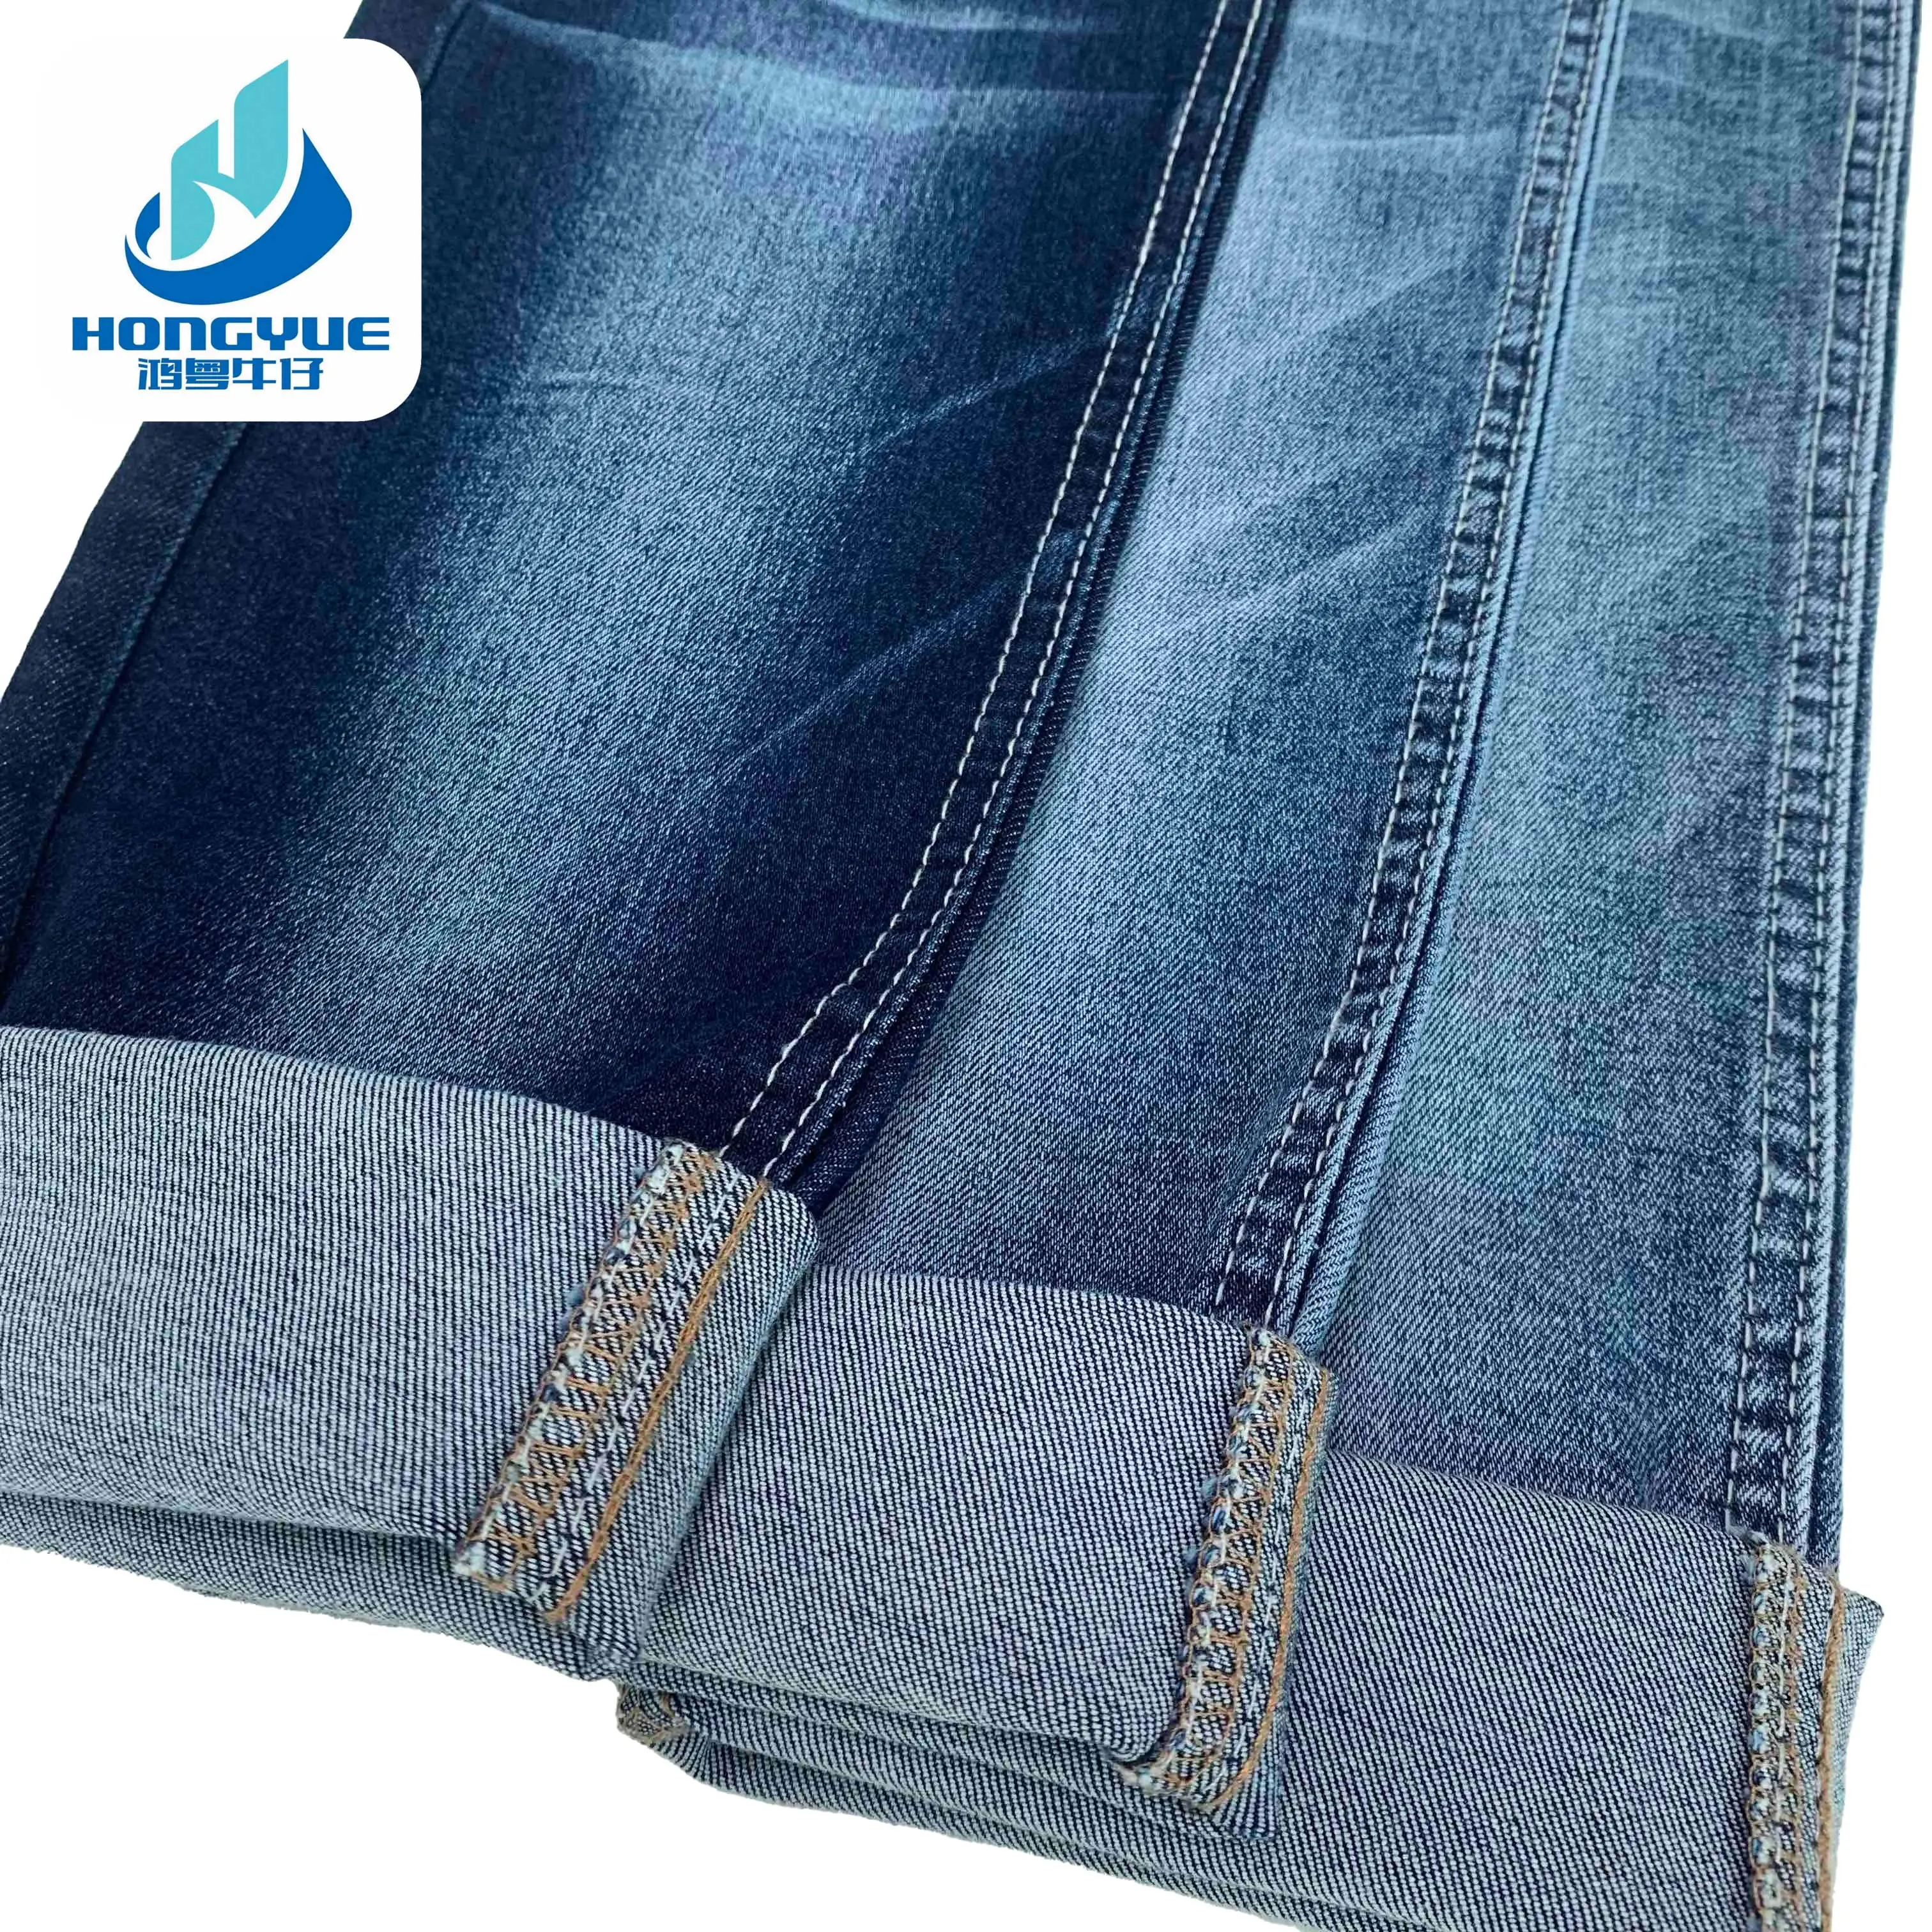 10oz bleu Indigo OE Twill Stretch Denim tissu Jeans tissu en rouleau